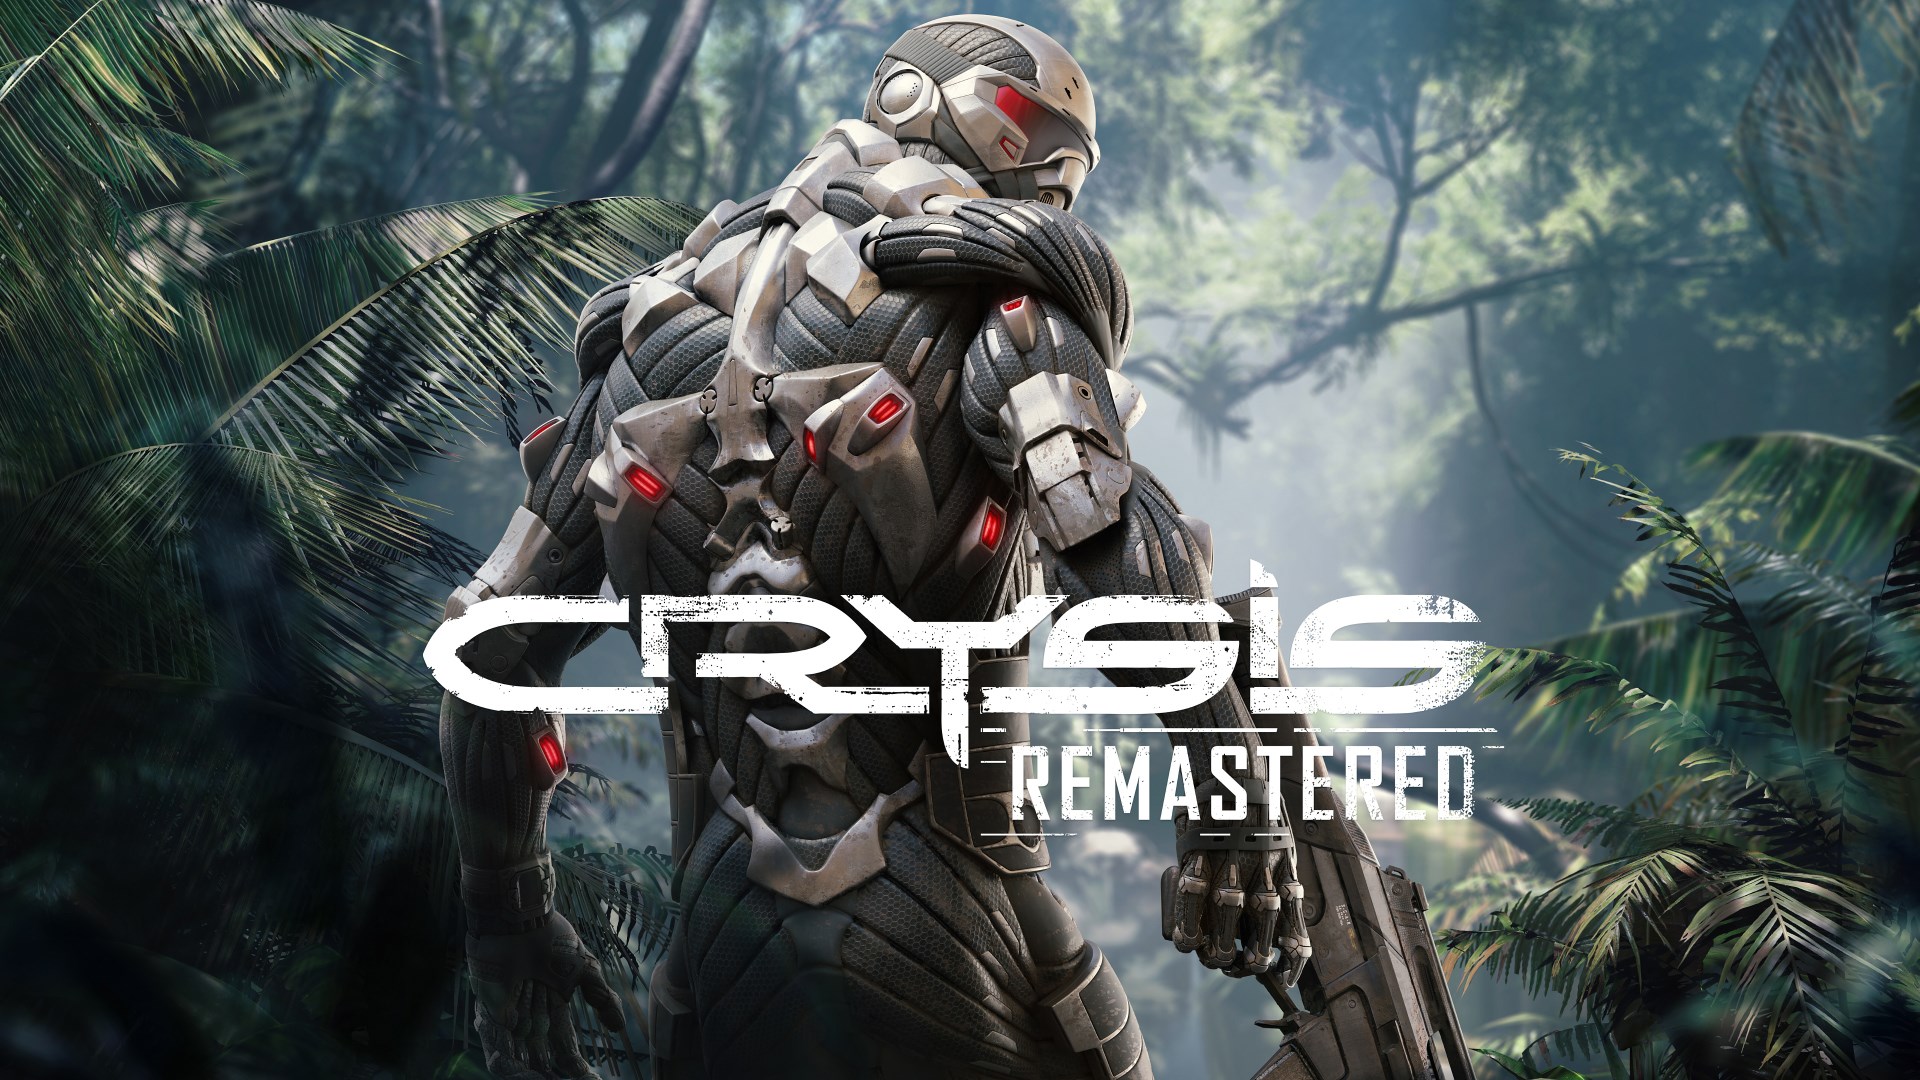 crysis remastered trilogy game pass